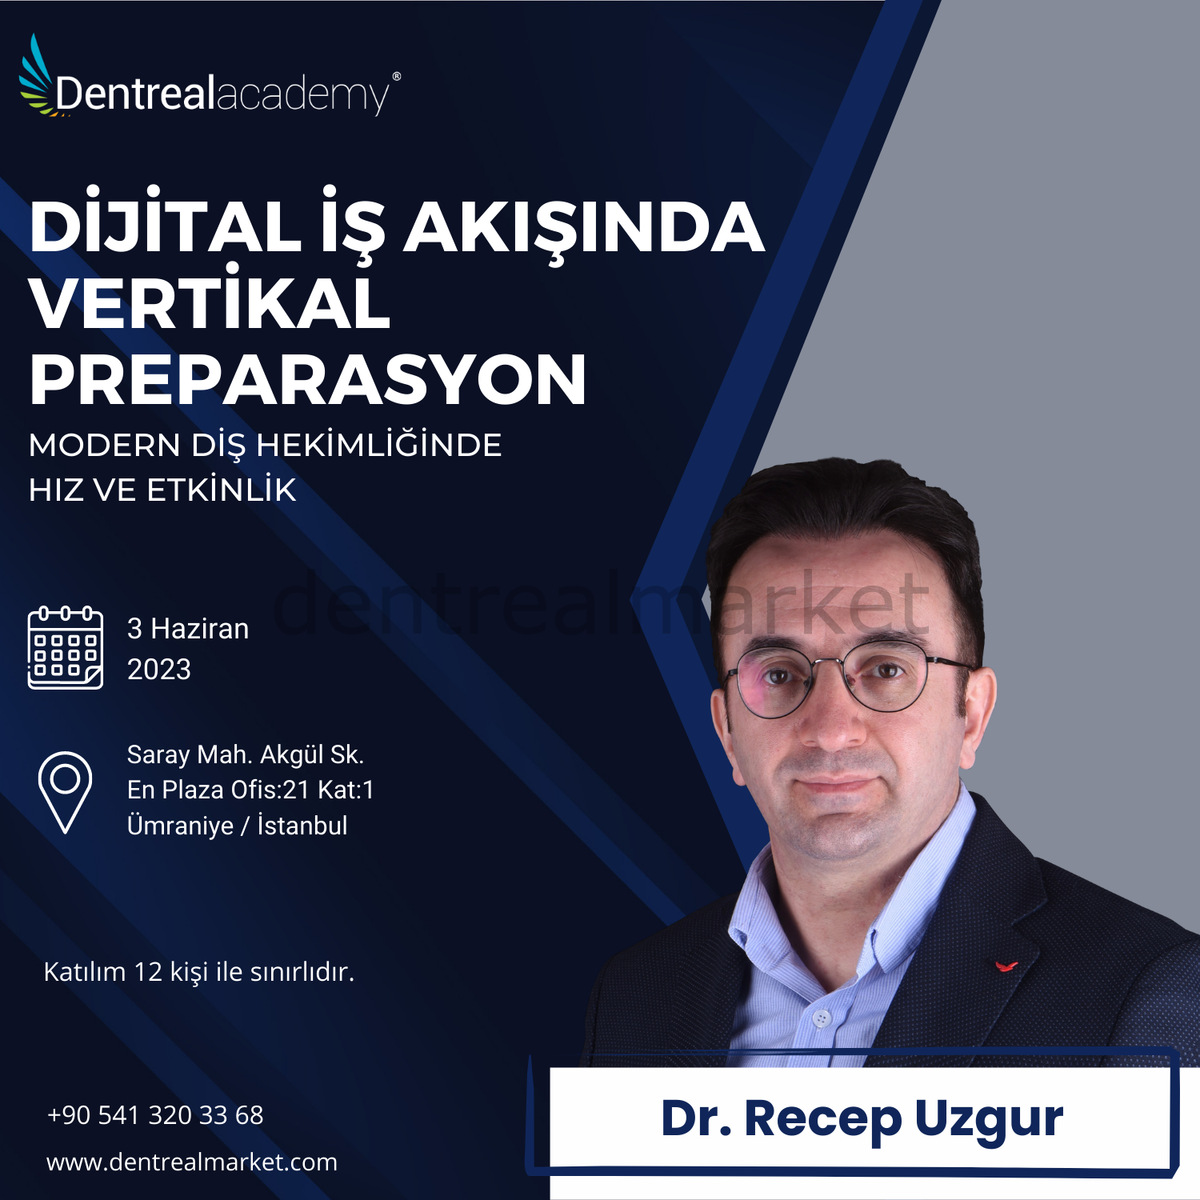 DentrealStore - Dentrealacademy Vertical Preparation in a Digital Workflow - Speed and Efficiency in Modern Dentistry